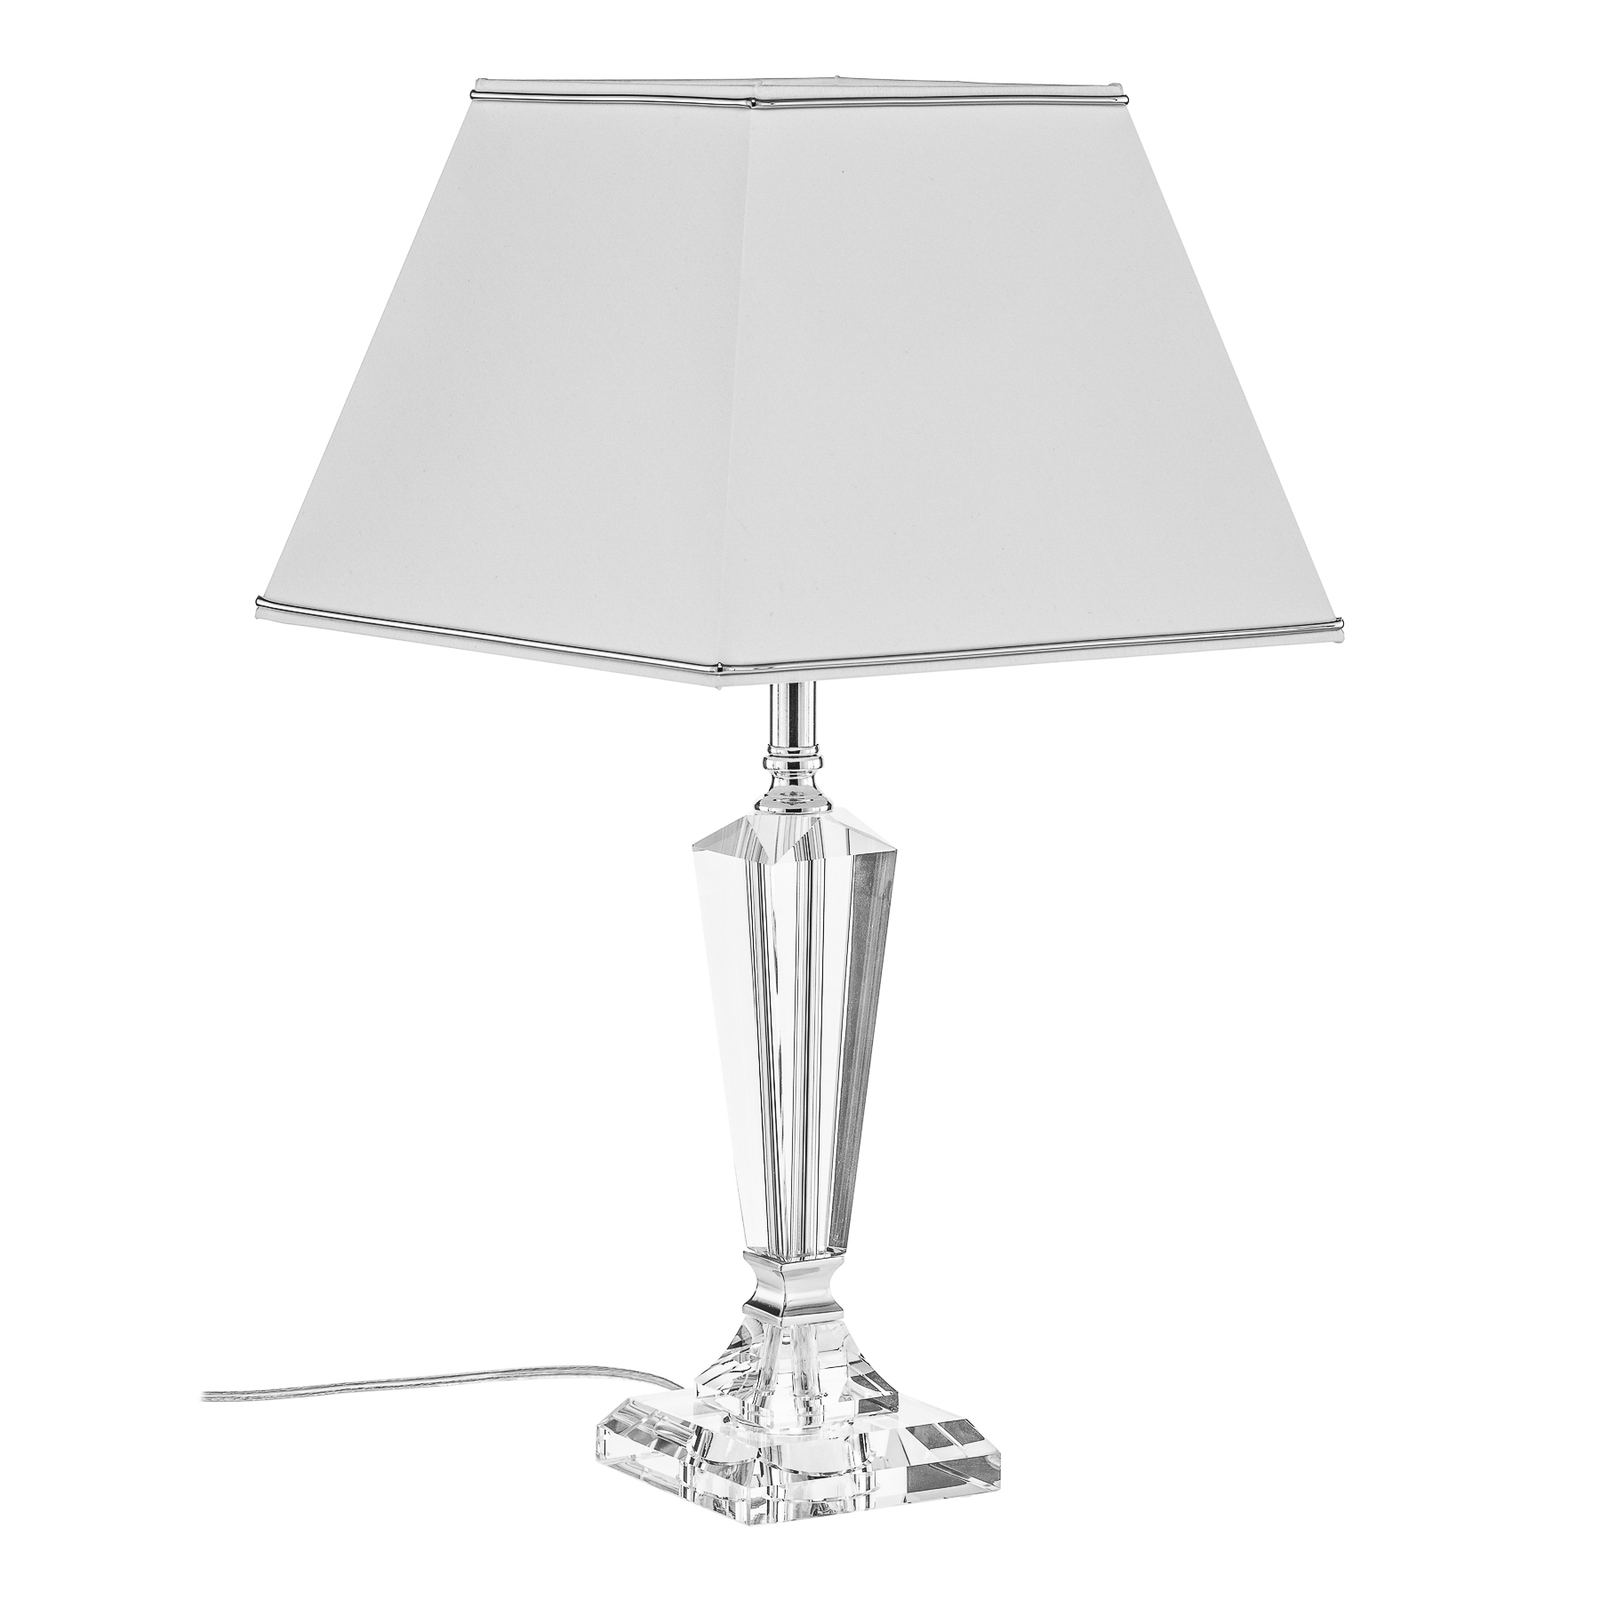 Veronique table lamp, narrow base, white/chrome